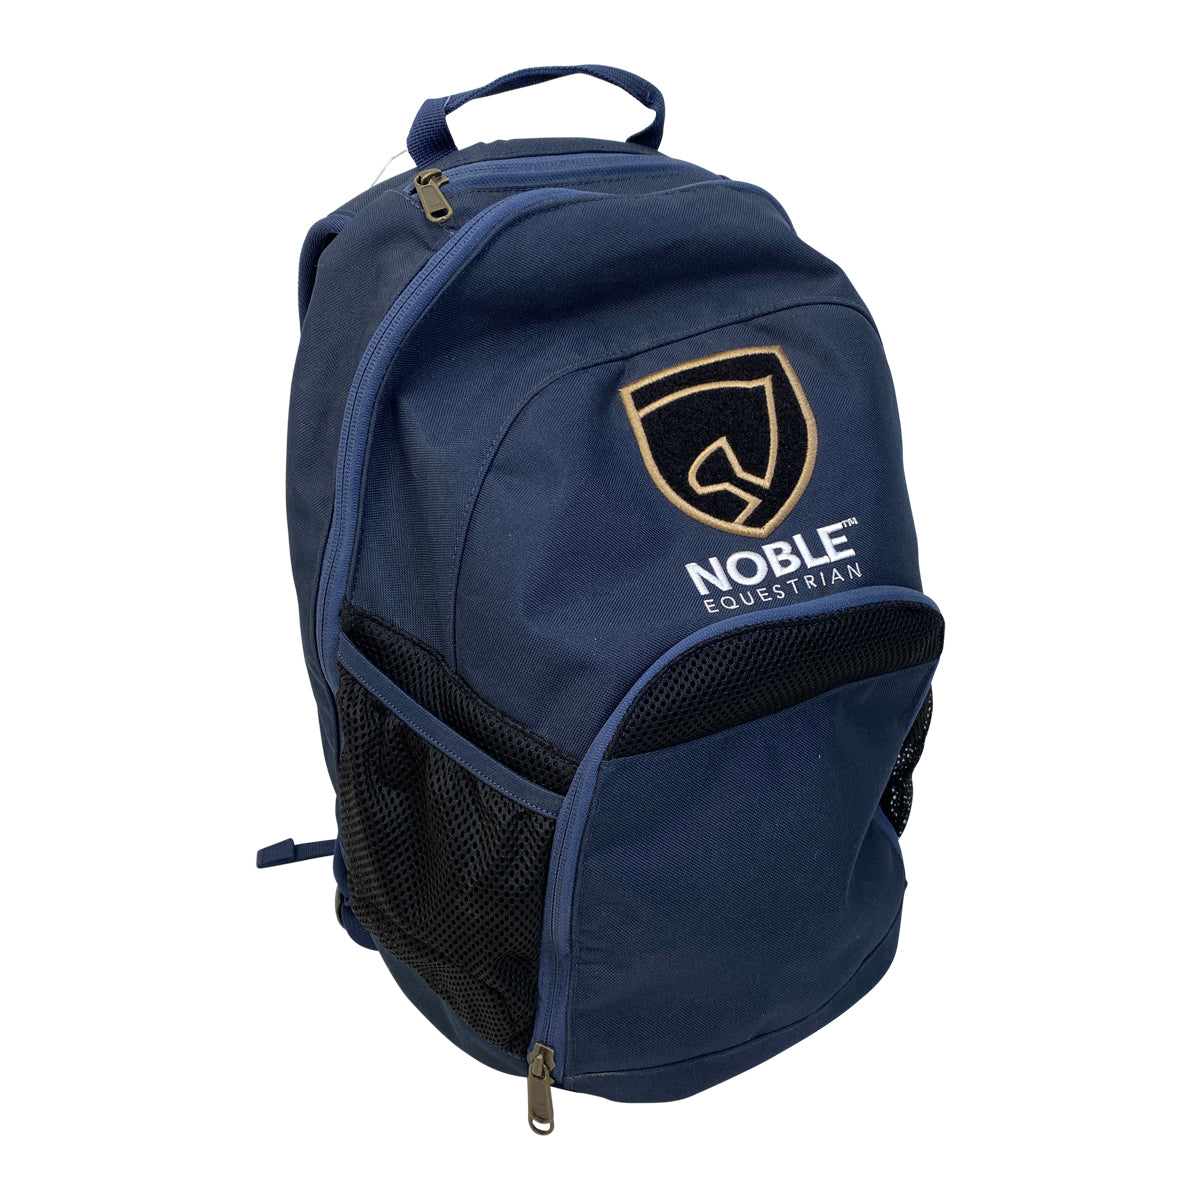 Noble Equestrian Horseplay Backpack in Navy/Black